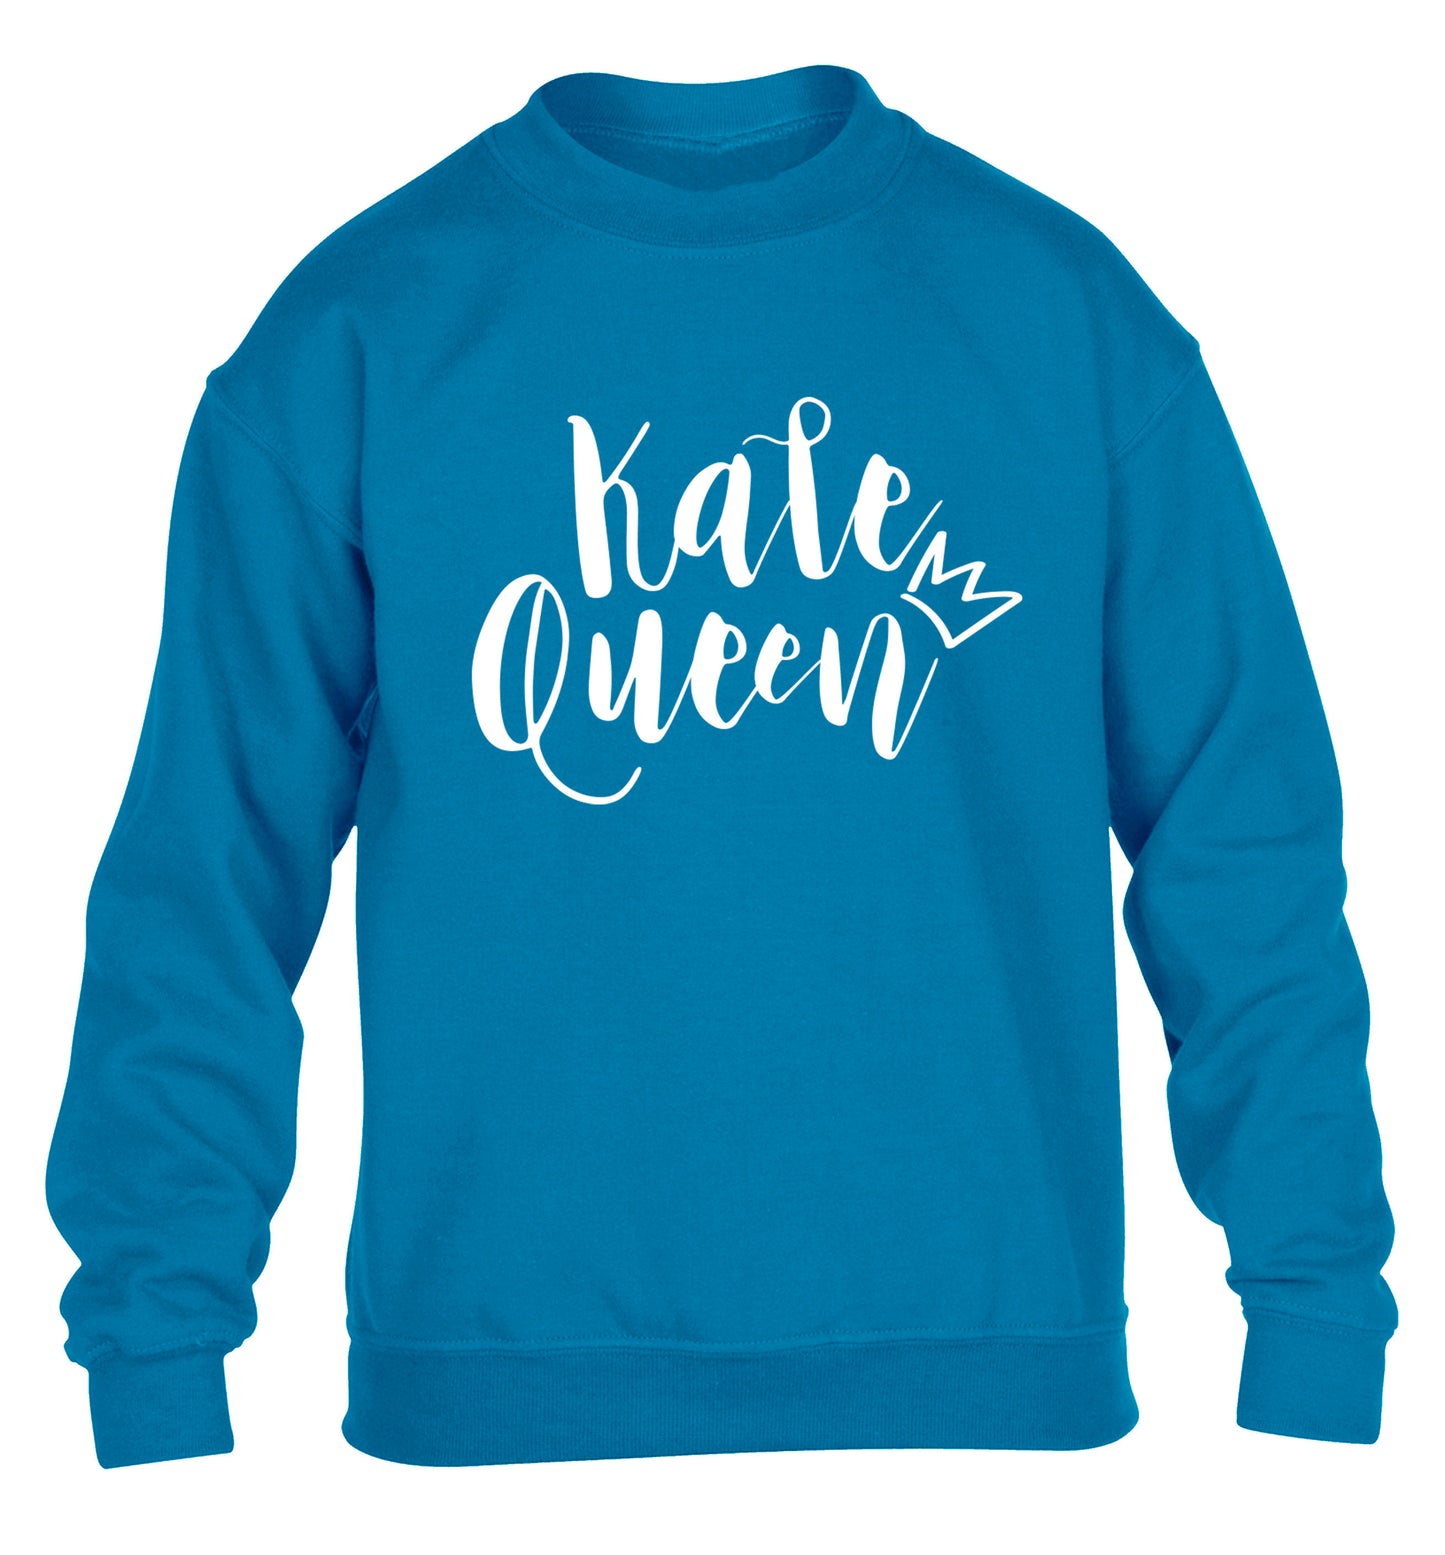 Kale Queen children's blue  sweater 12-14 Years